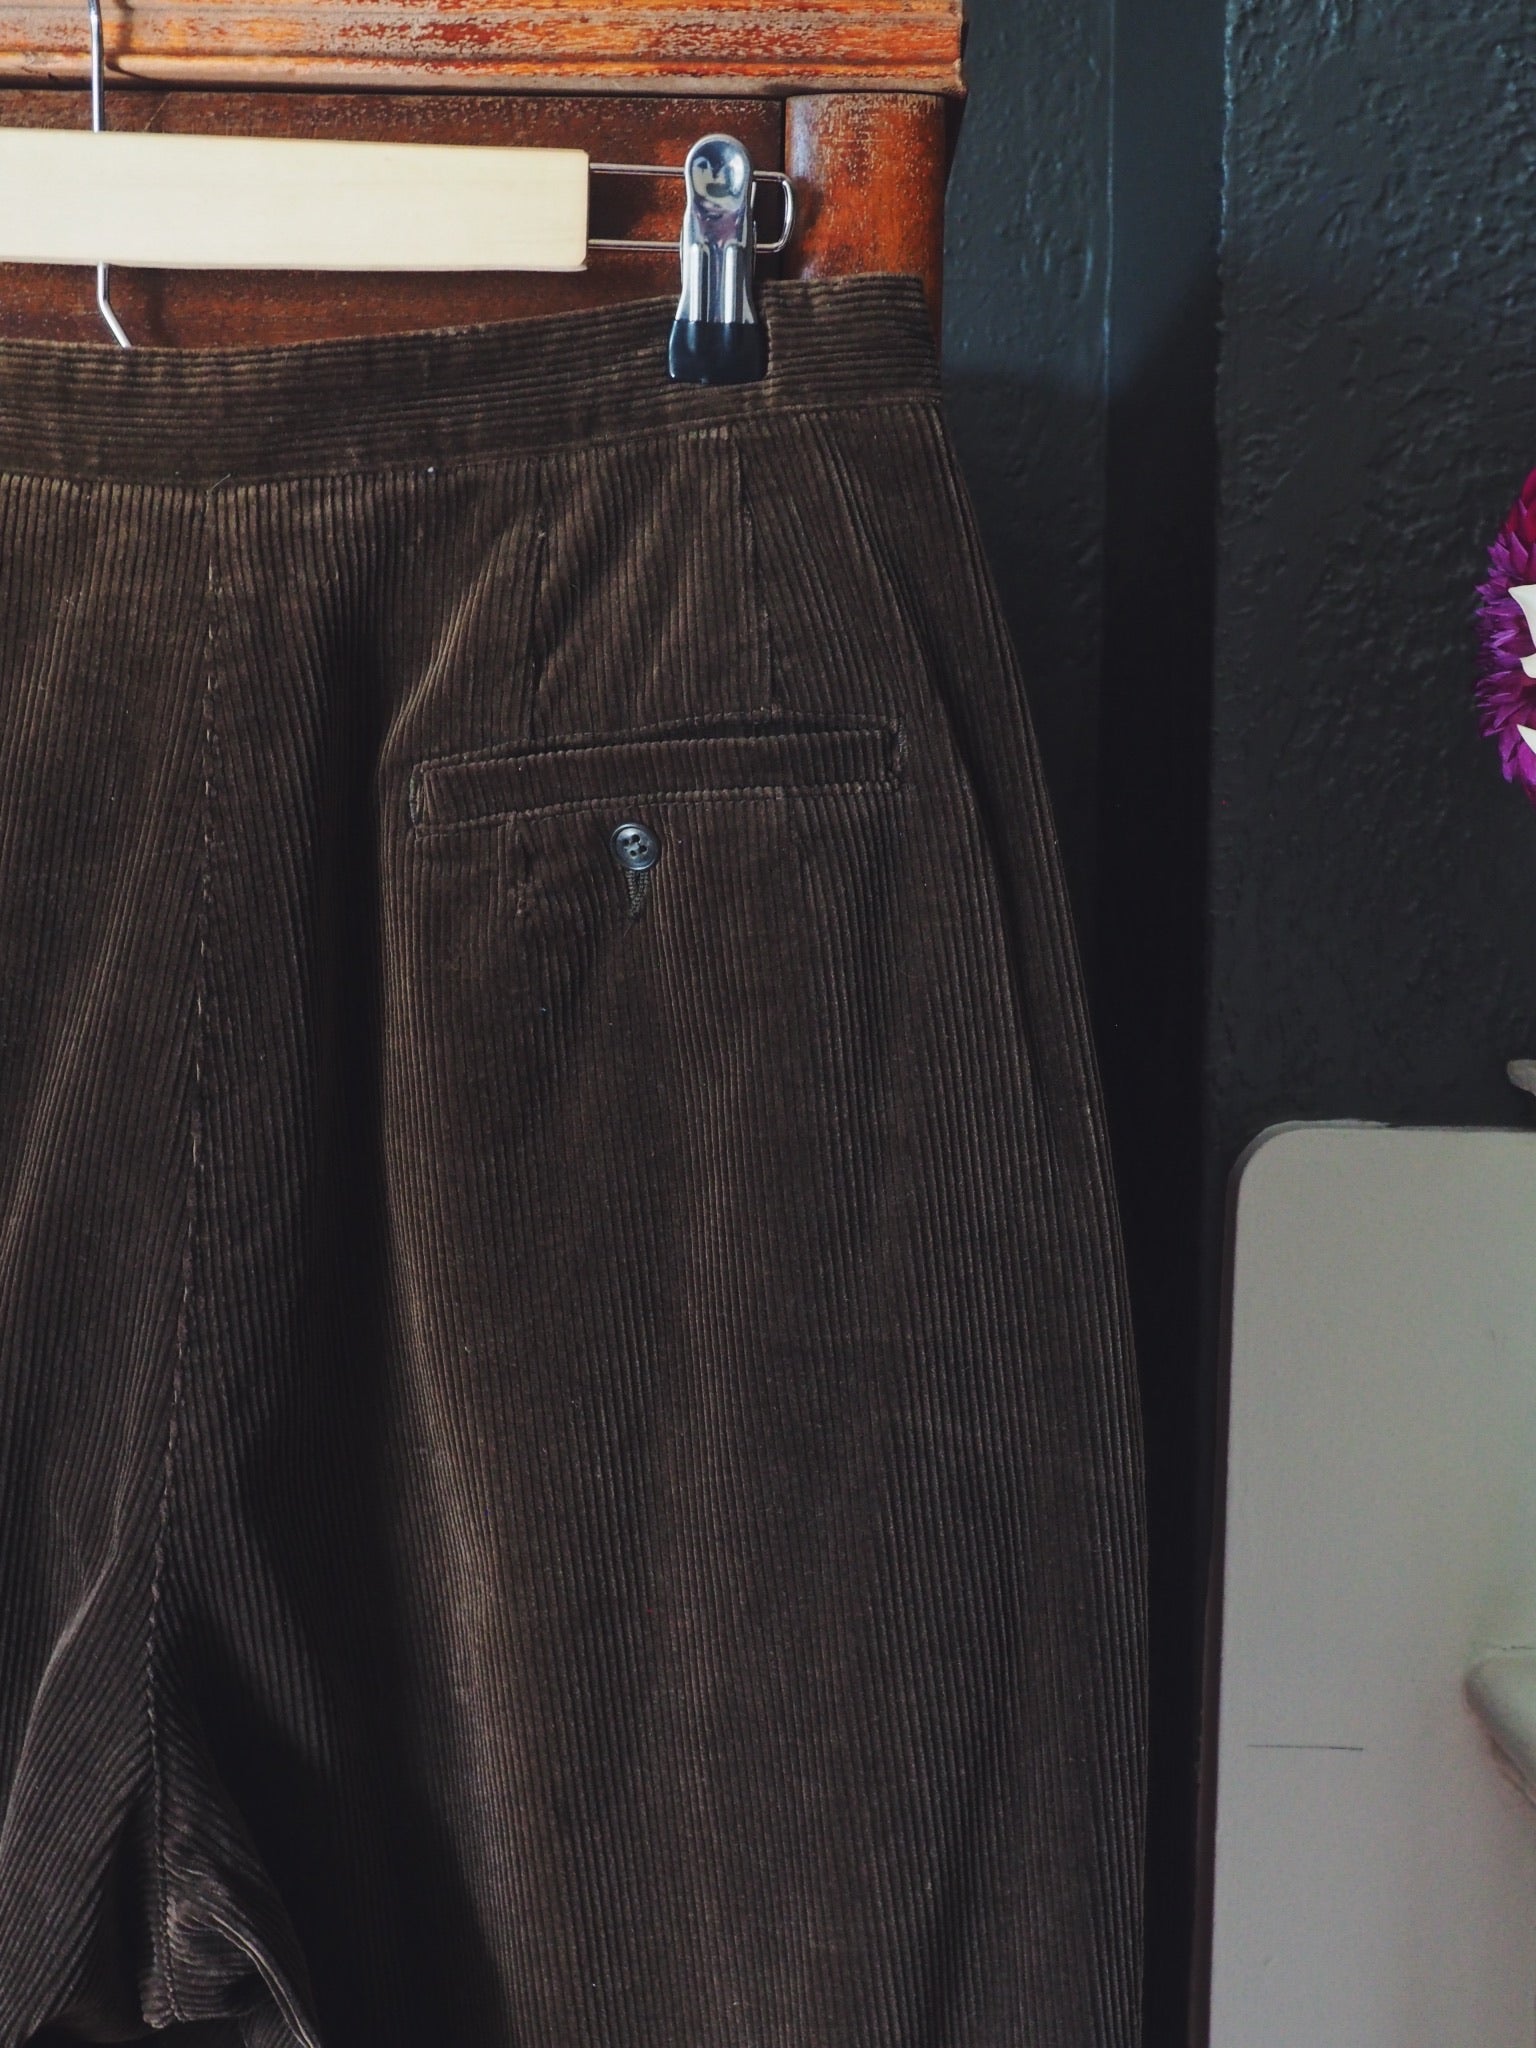 Vintage Mossy Brown Corduroy High-Waist Trouser